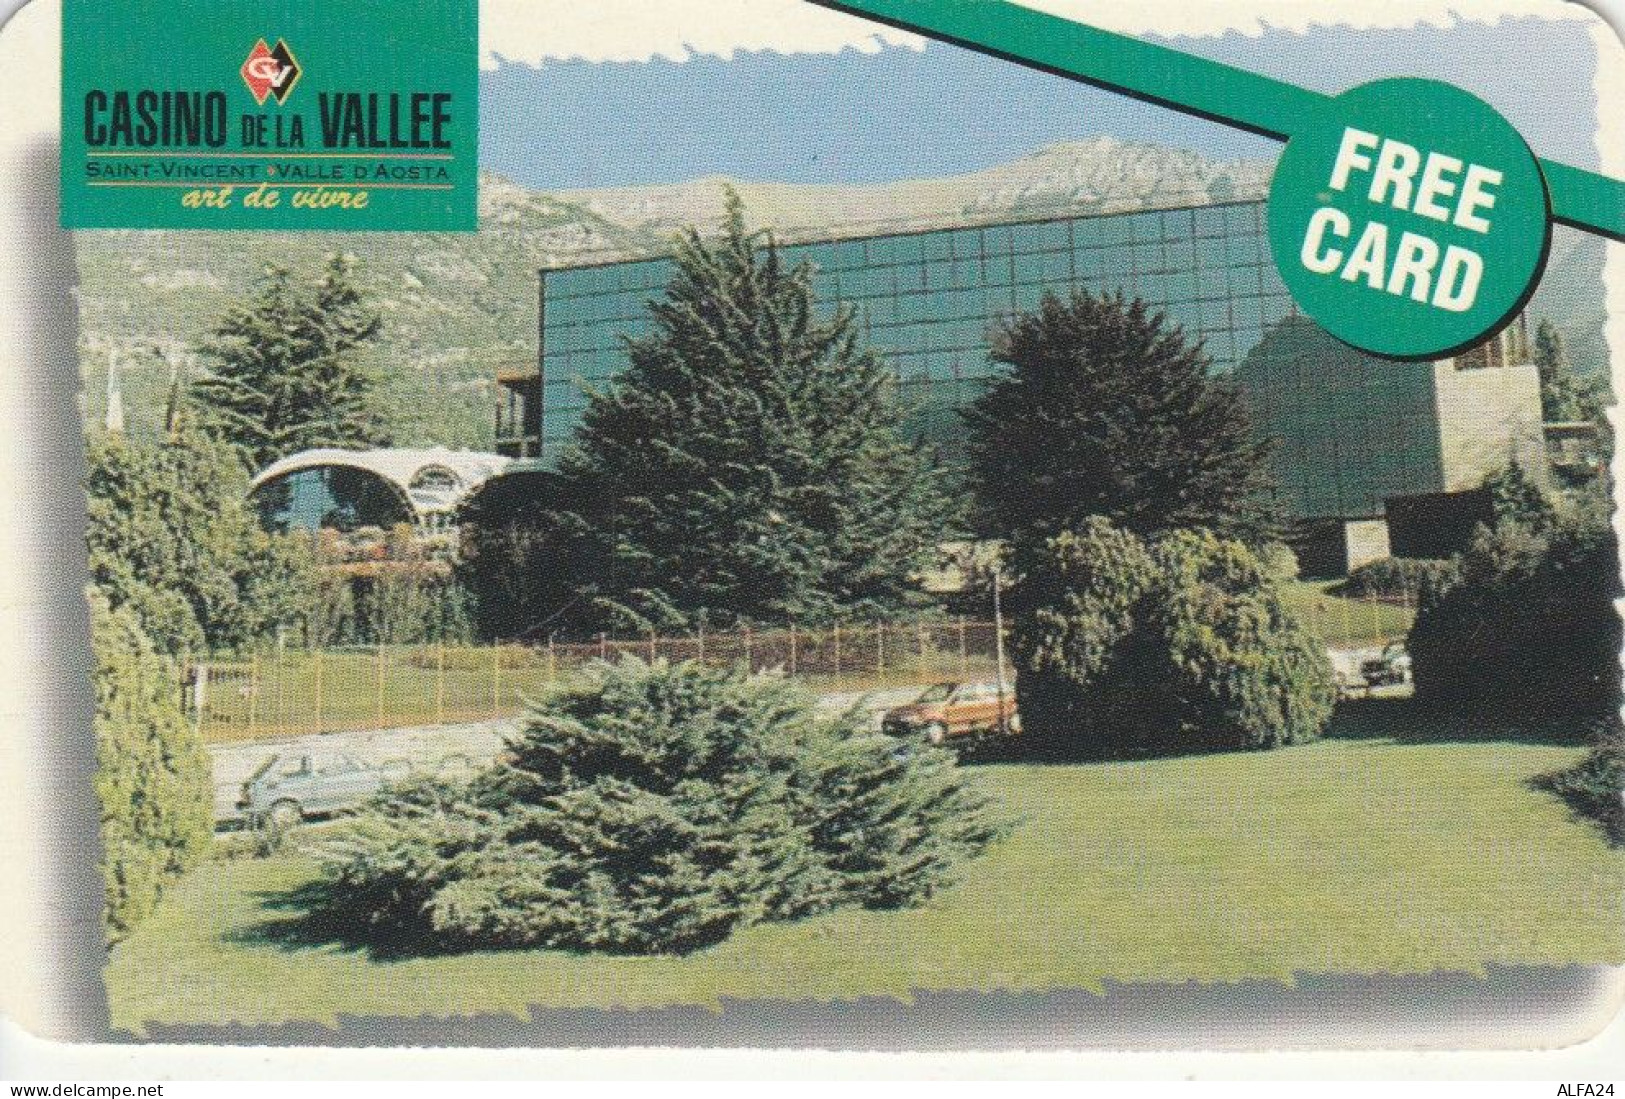 CARD INGRESSO CASINO DE LA VALLEE (CK3779 - Tarjetas De Casino